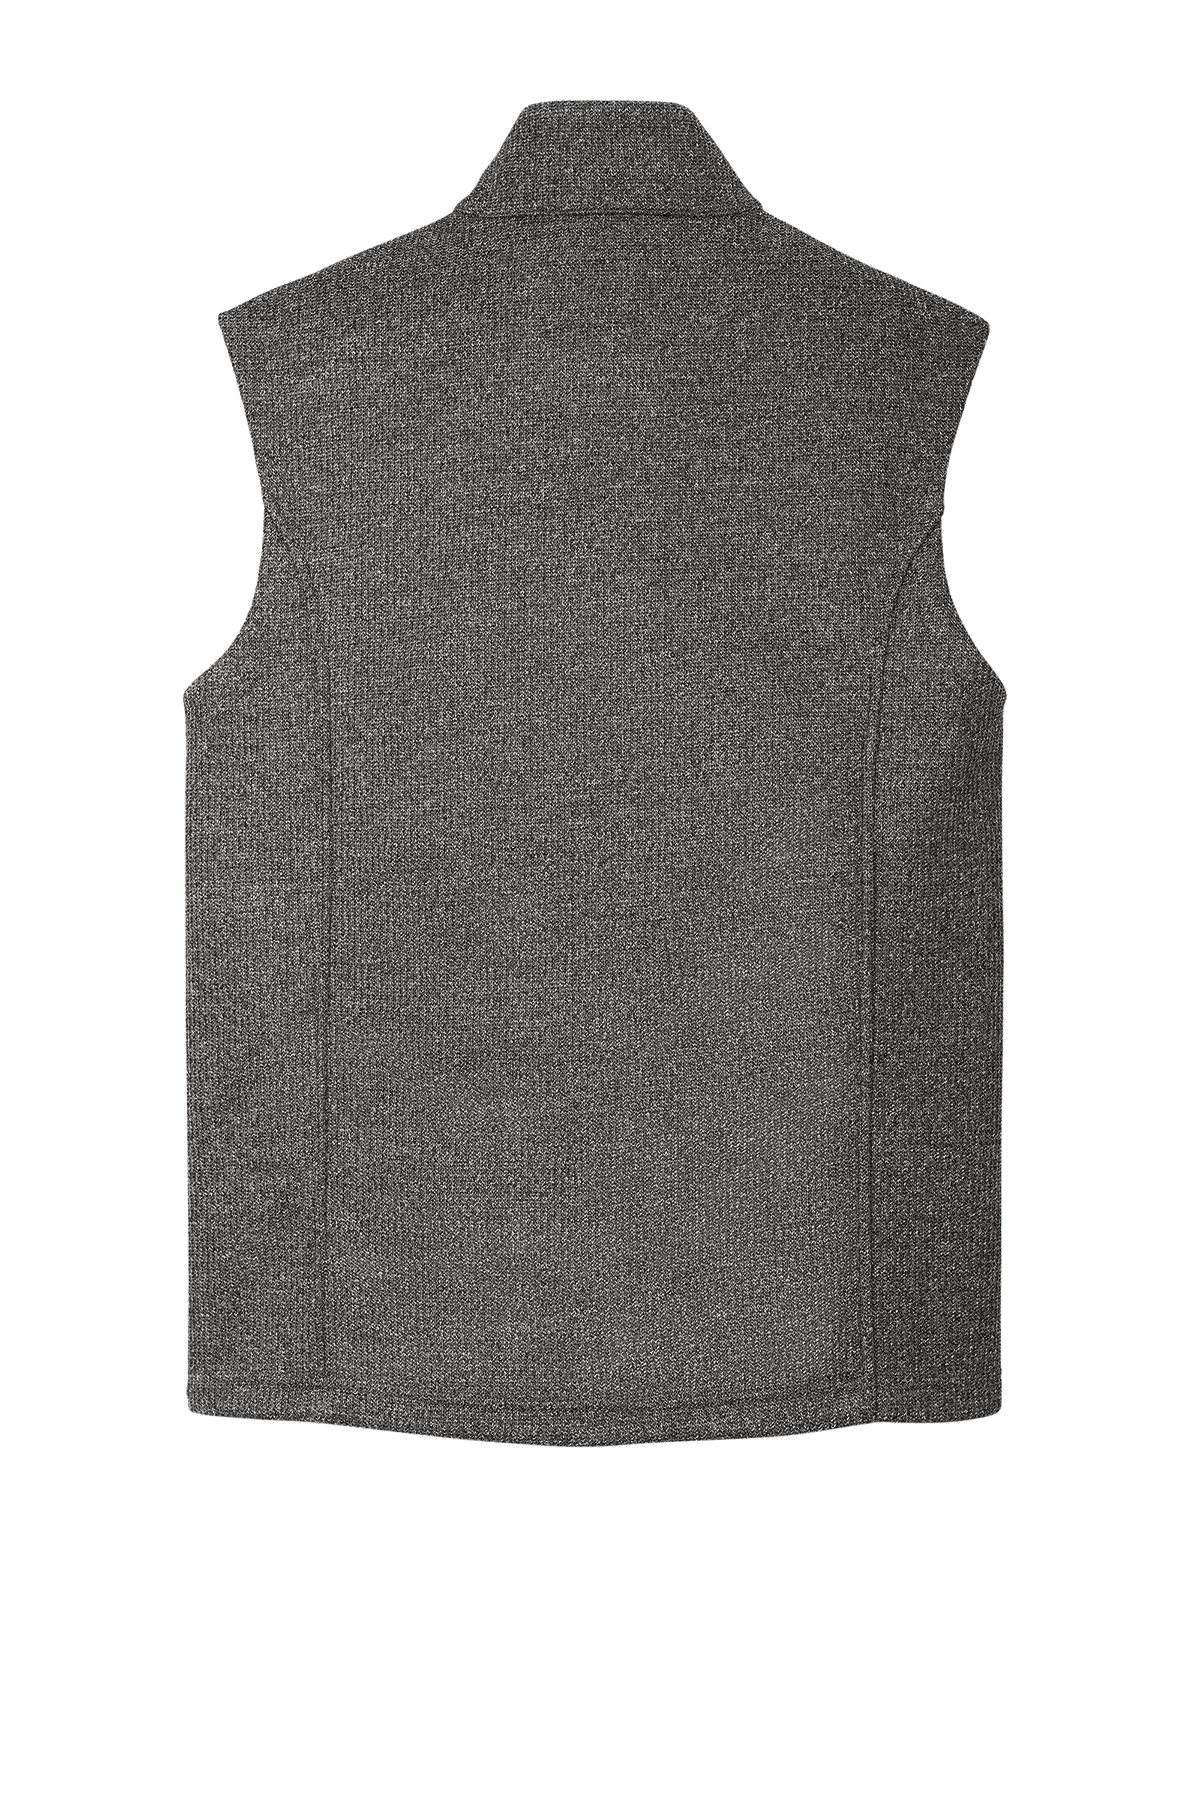 OGIO Grit Fleece Vest | Product | SanMar